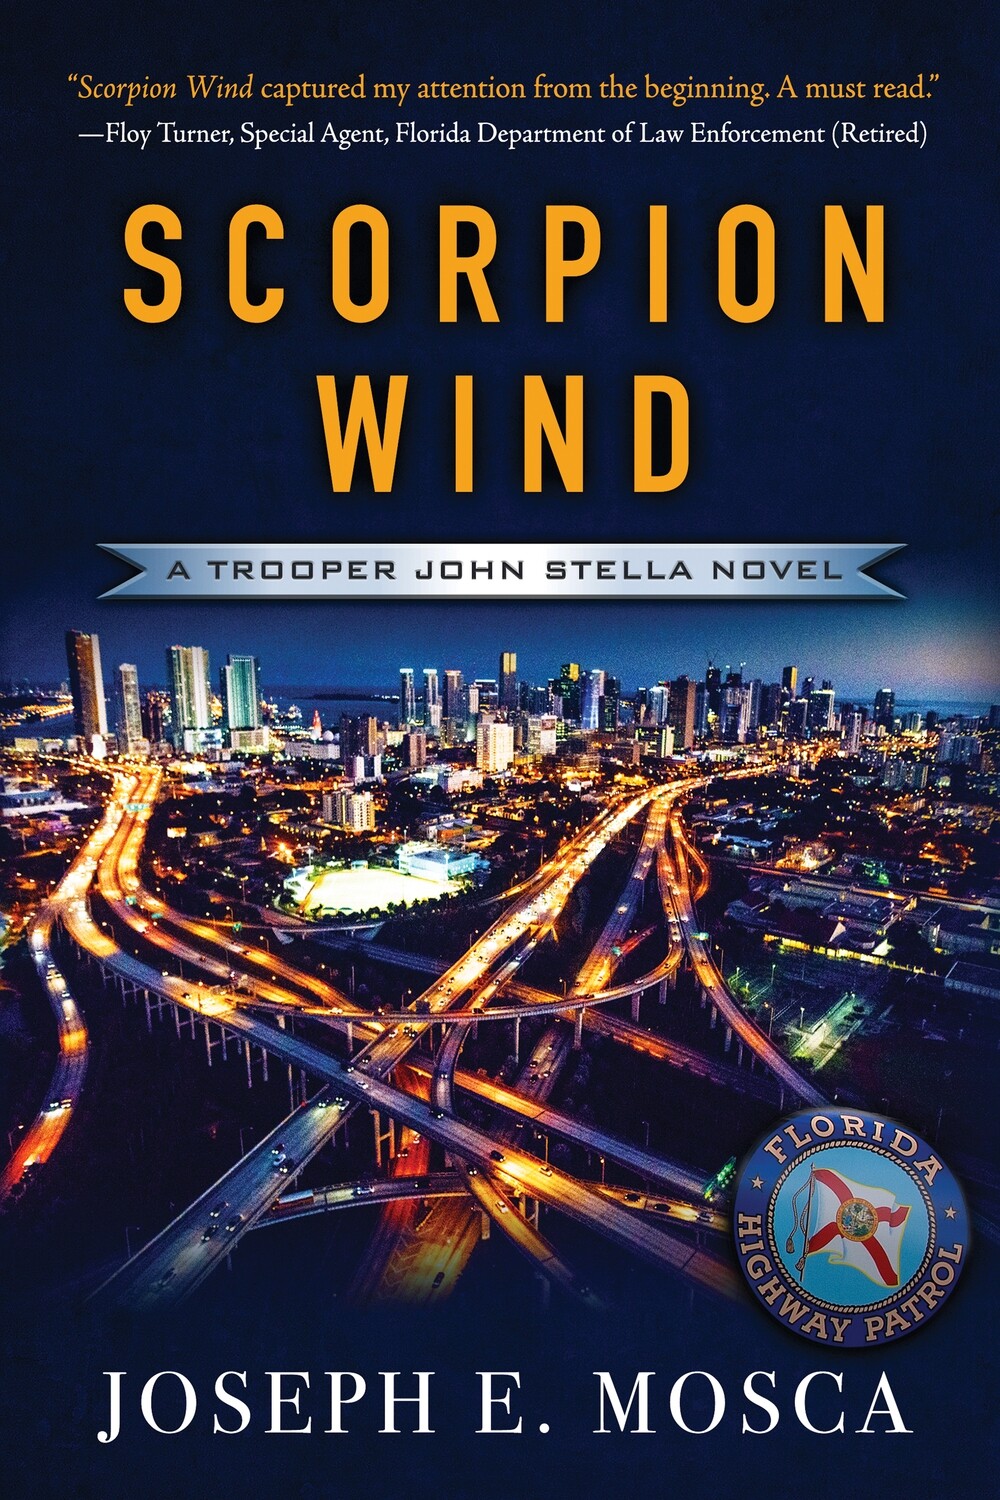 Scorpion Wind: A Trooper John Stella Novel by Joseph E. Mosca